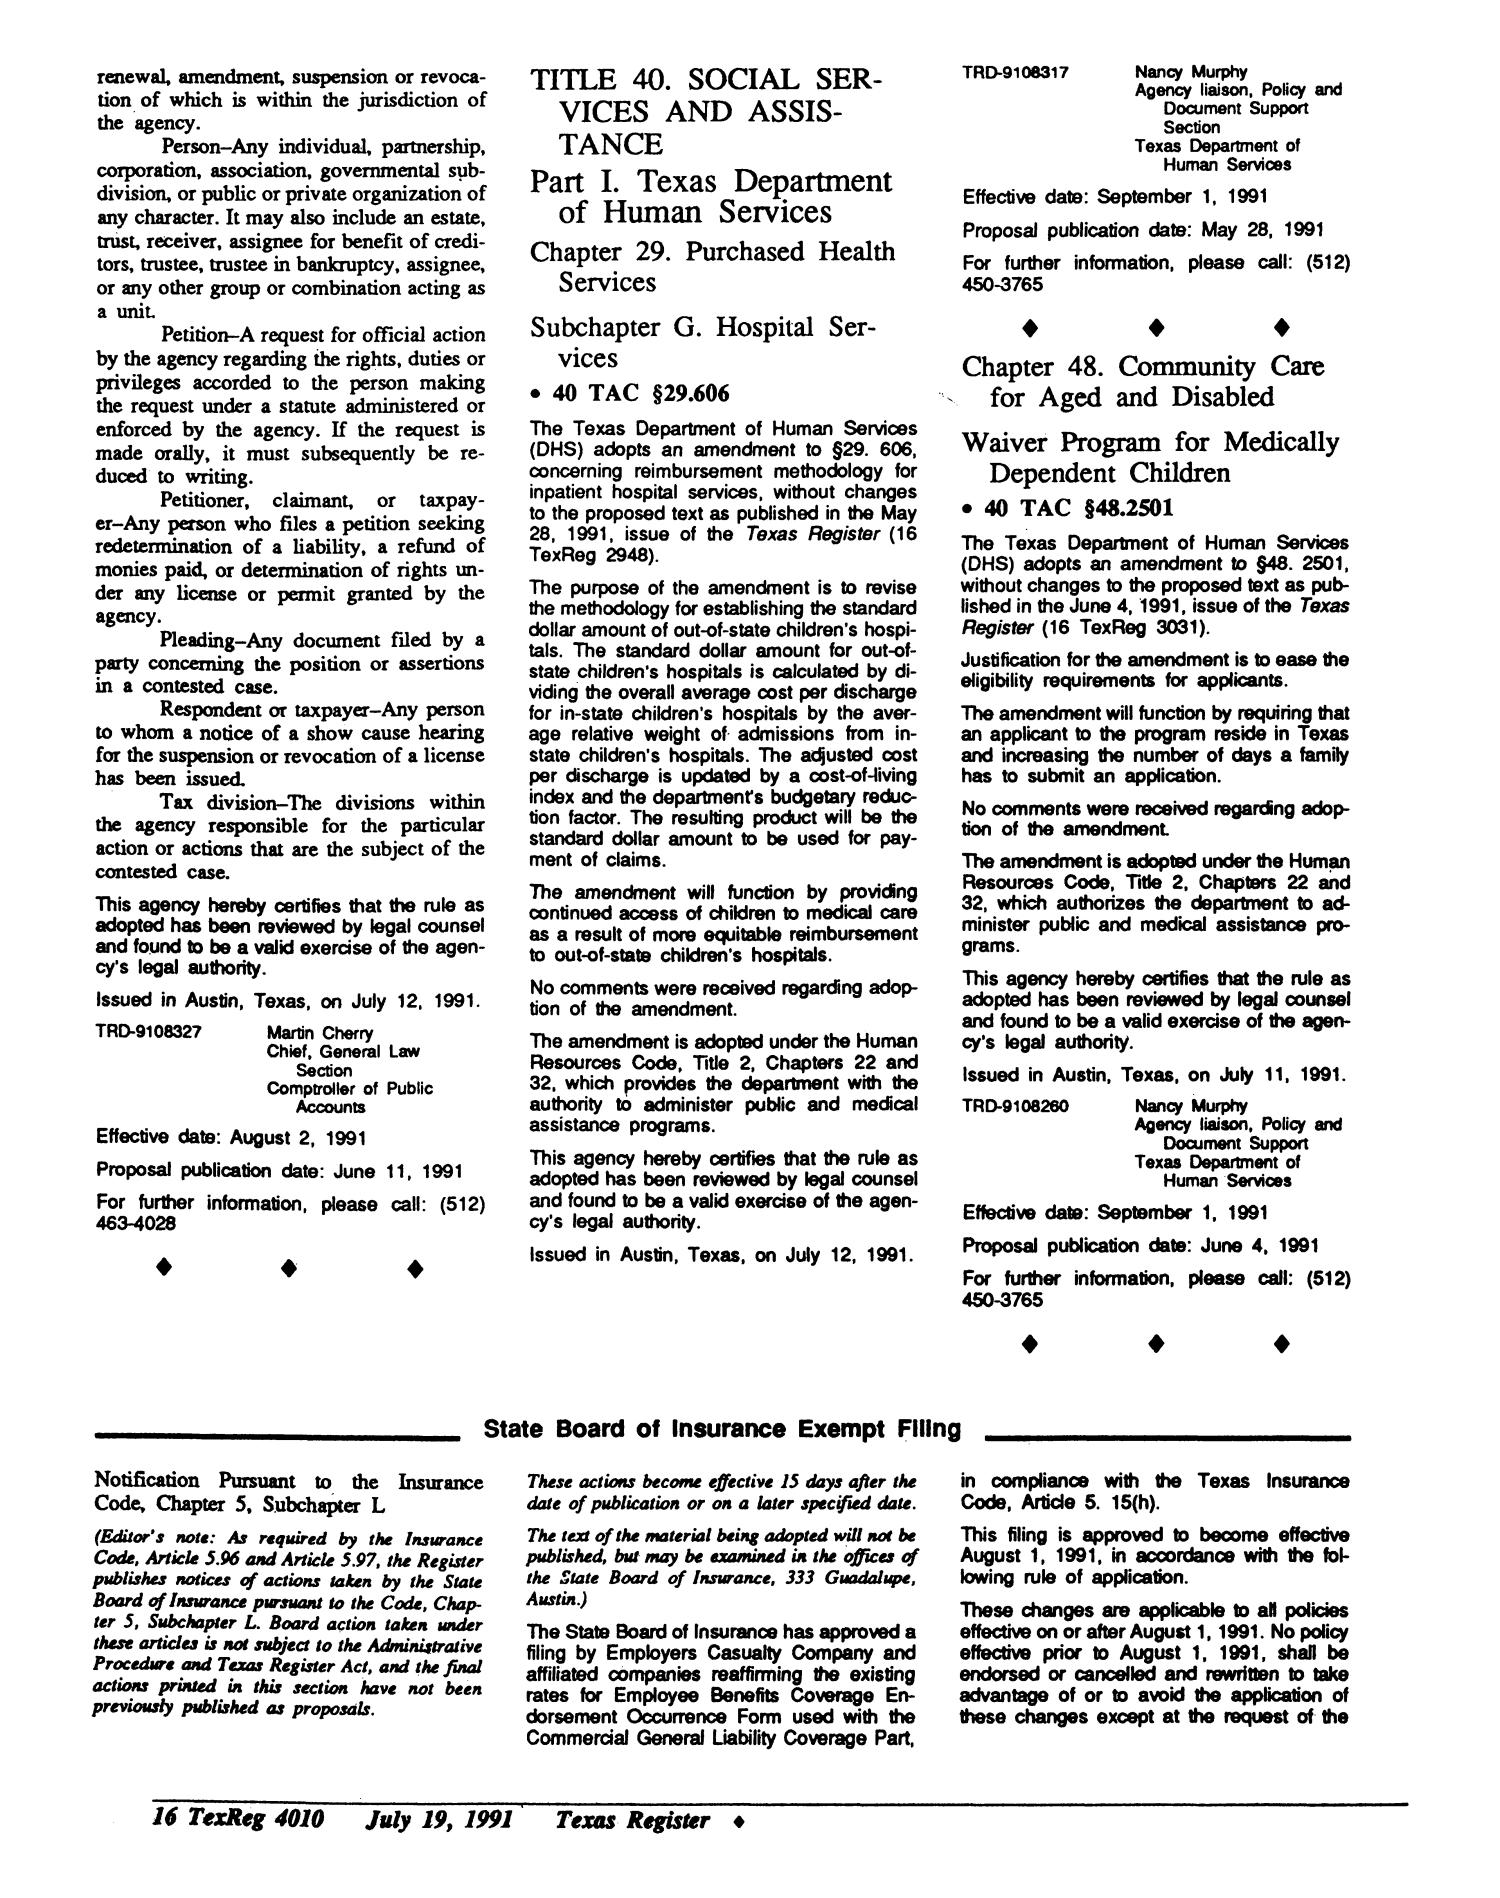 Texas Register, Volume 16, Number 54, Pages 3967-4030, July 19, 1991
                                                
                                                    4010
                                                